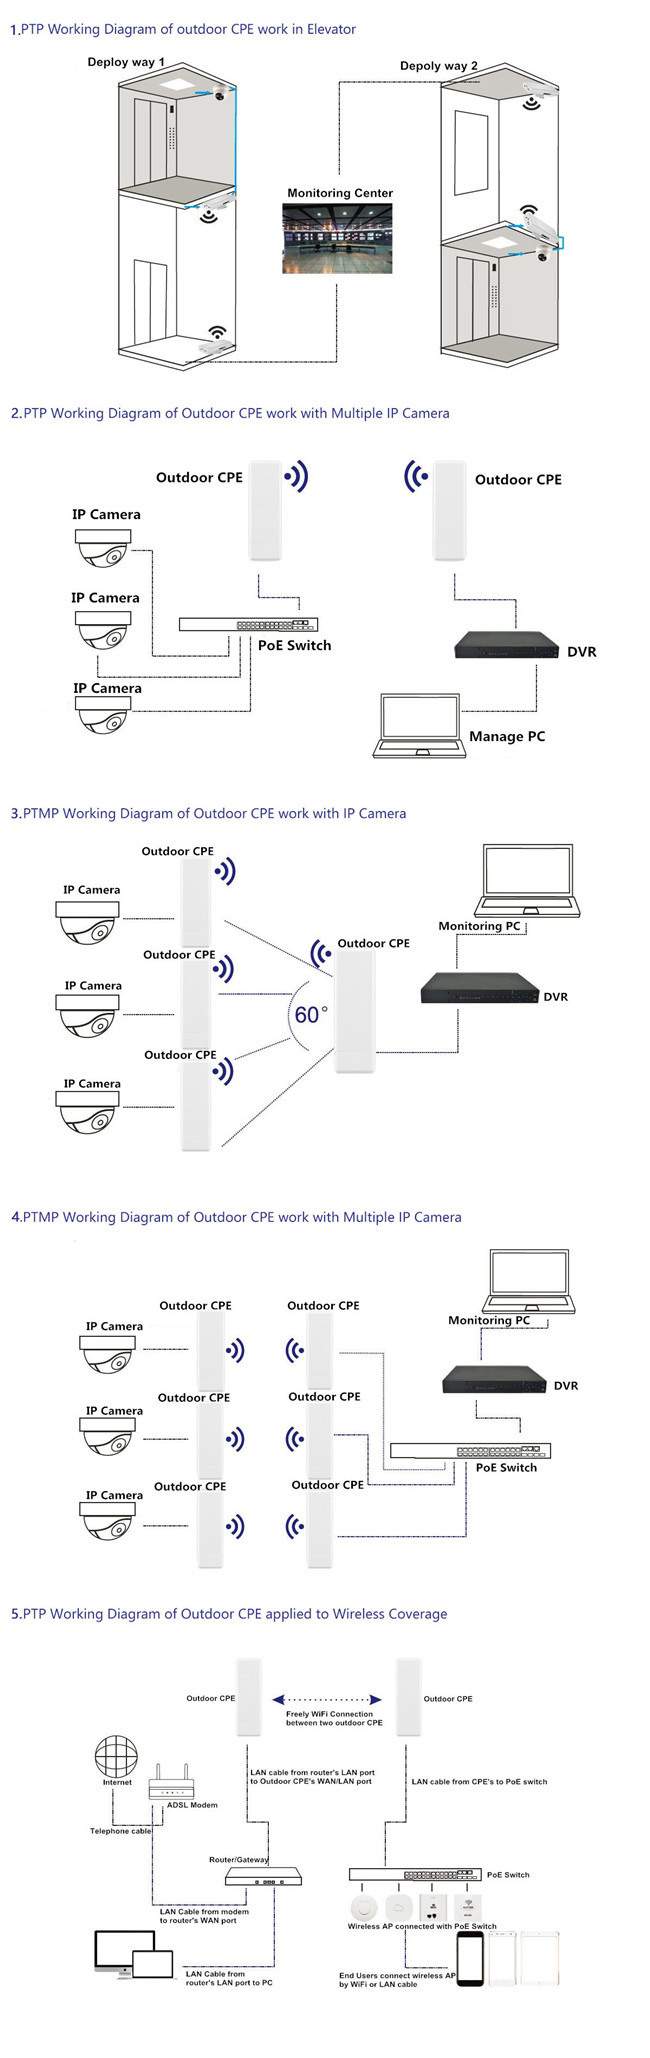 15dBi η κατευθυντική κεραία 2,4 υπαίθρια WiFi γέφυρα Ghz ενσωματώνει PTP PTmP